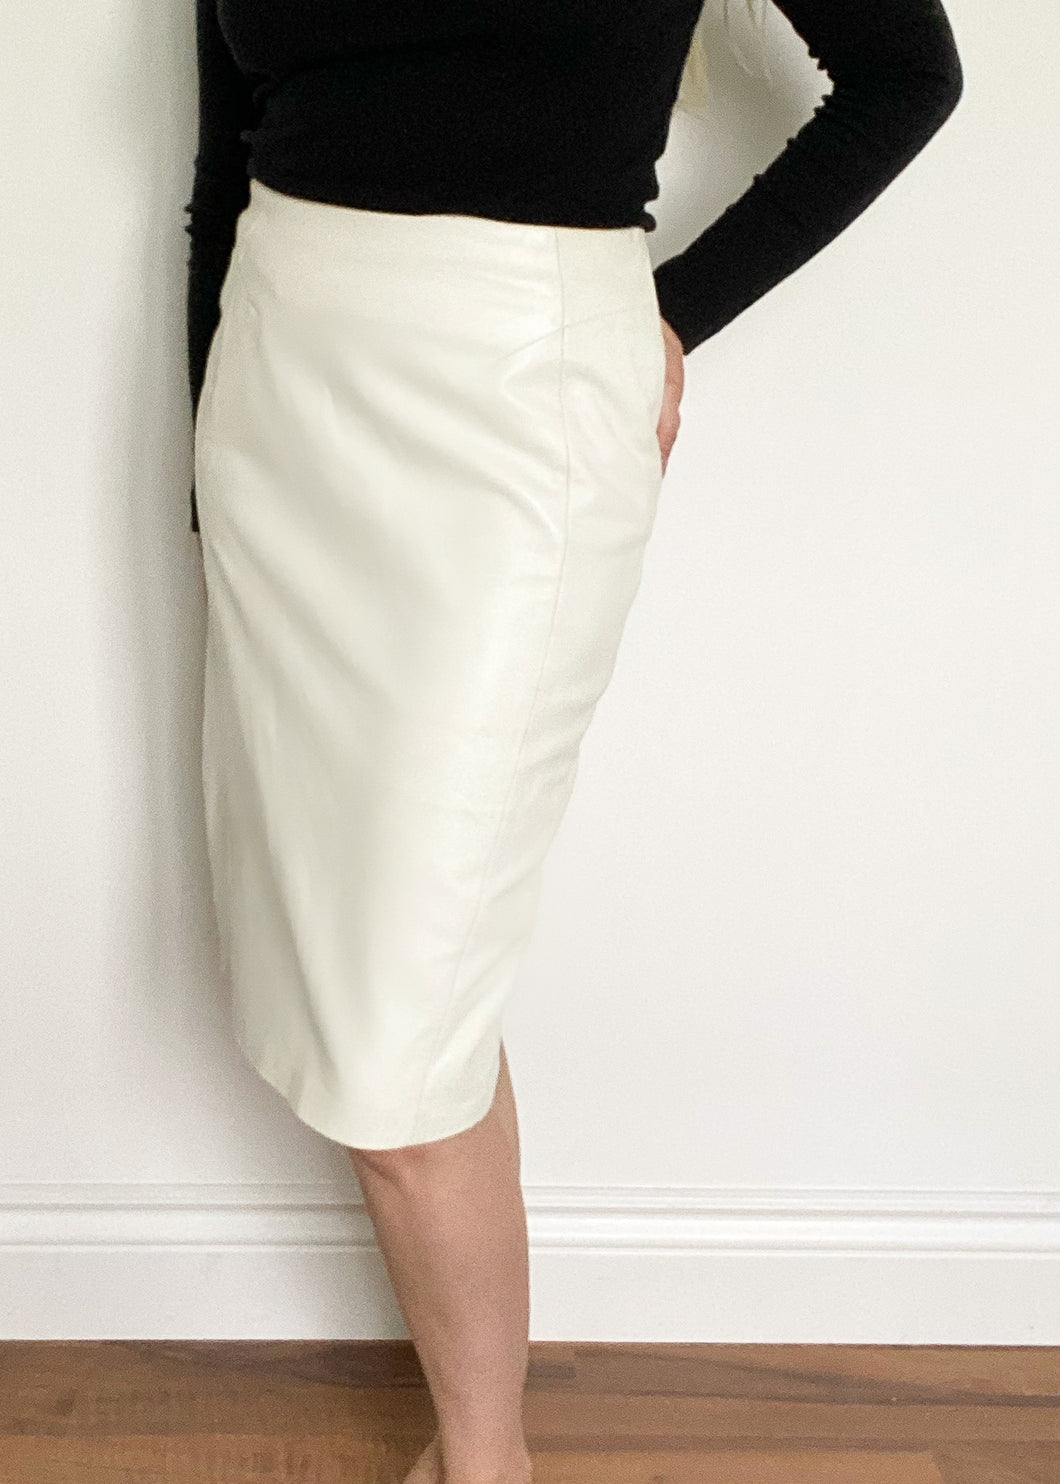 Danier White Leather Pencil Skirt